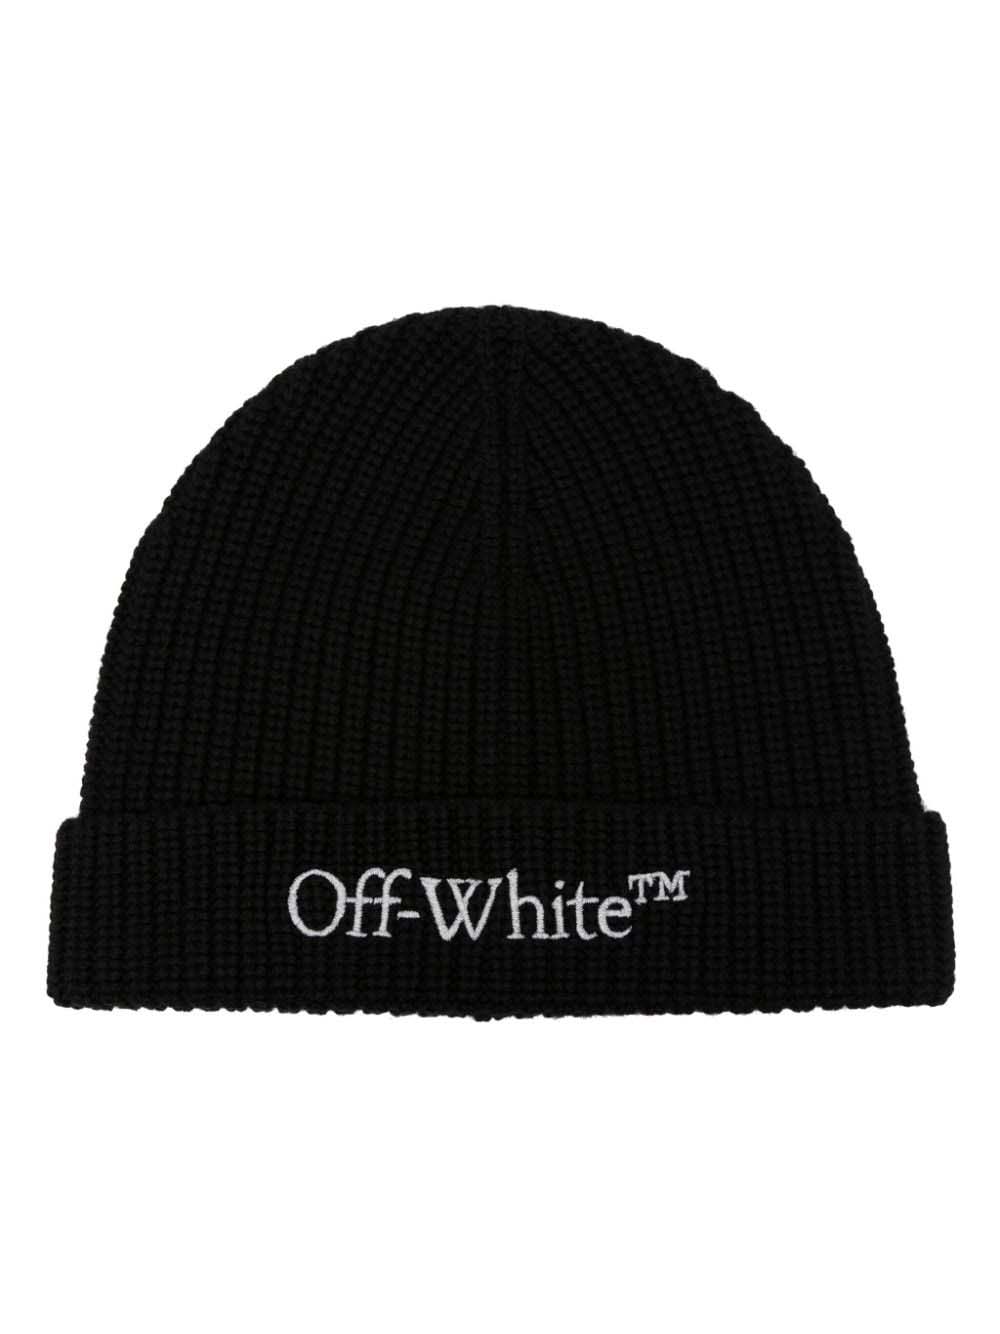 Off-White Bookish Classic Knit Beanie Black/White